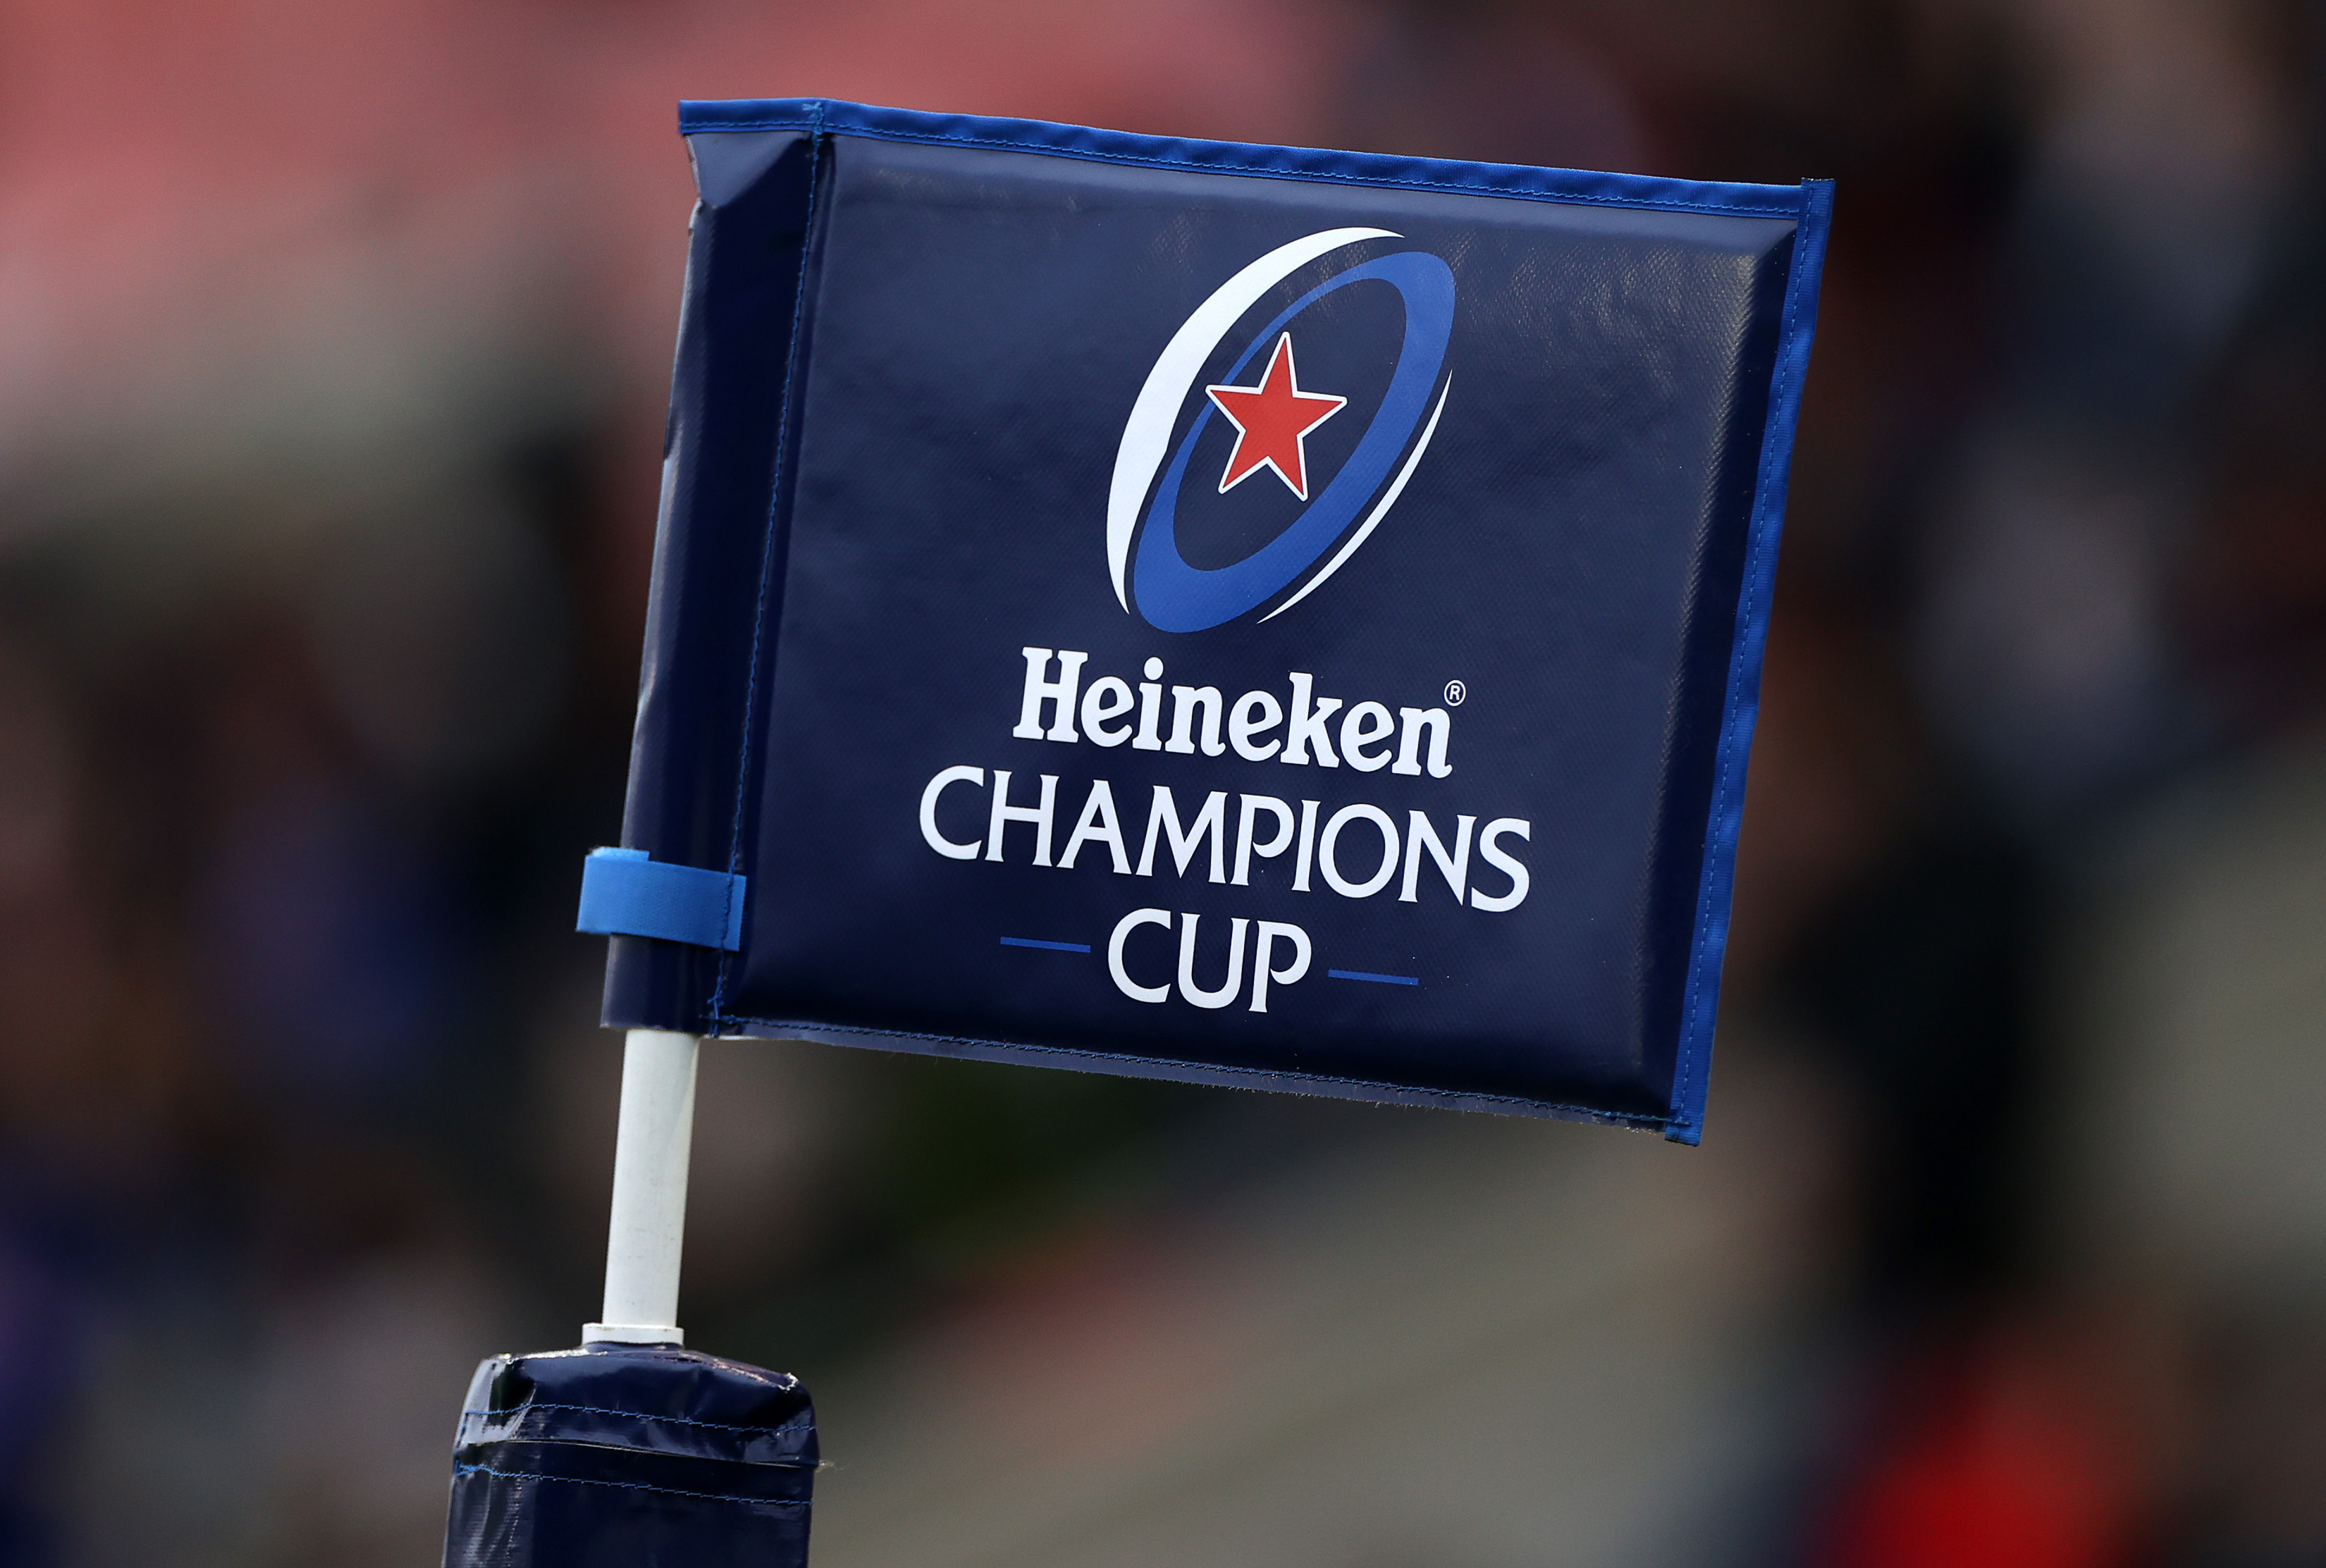 Ospreys Heineken Champions Cup Fixtures Announced Ospreys